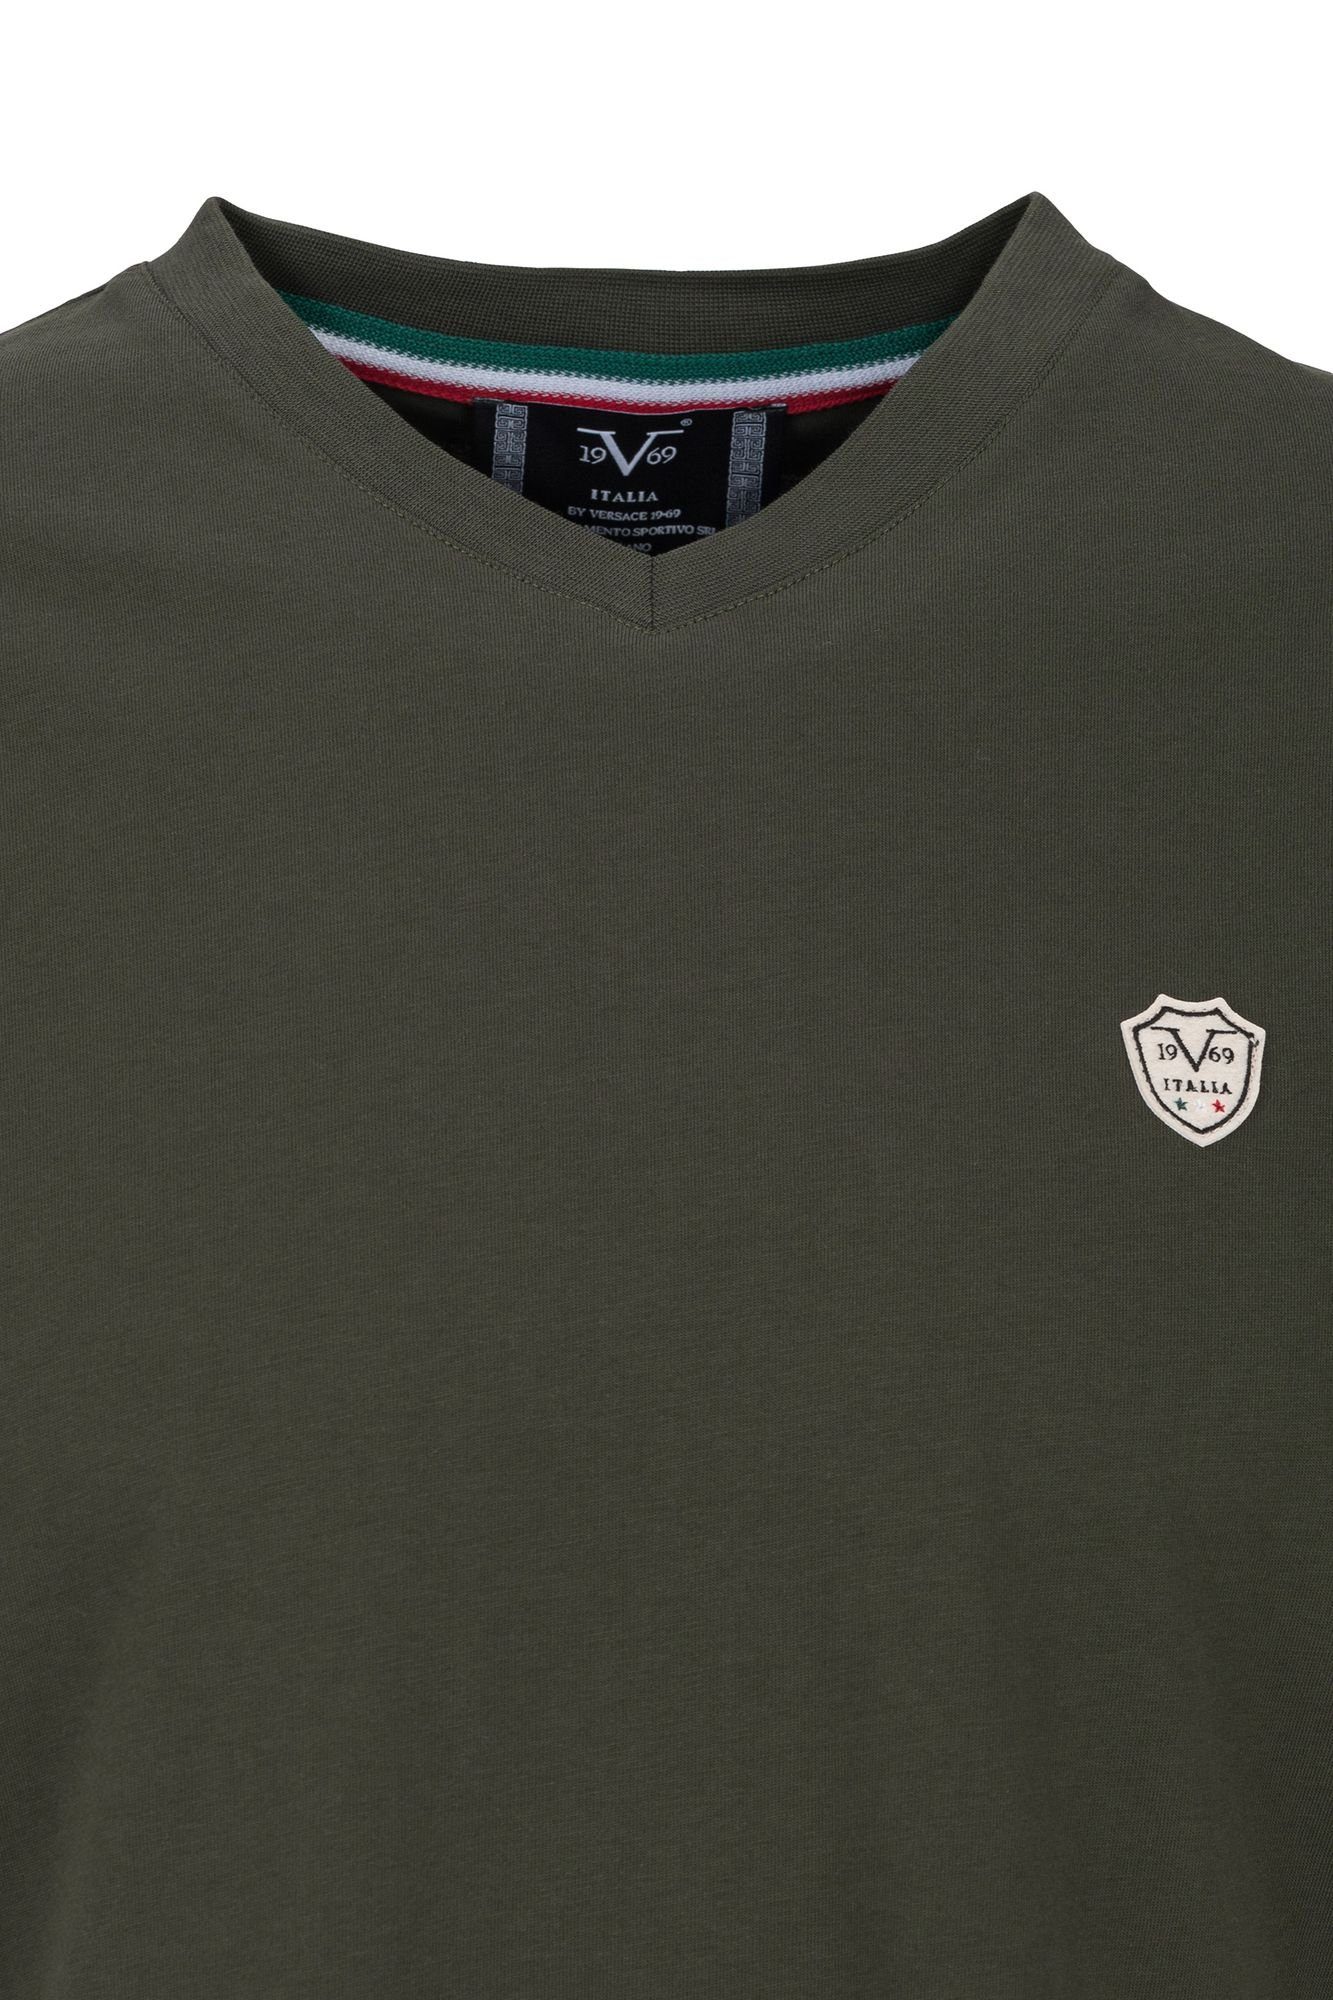 19V69 Sportivo - SRL Toni by Versace T-Shirt Schield by Italia Versace